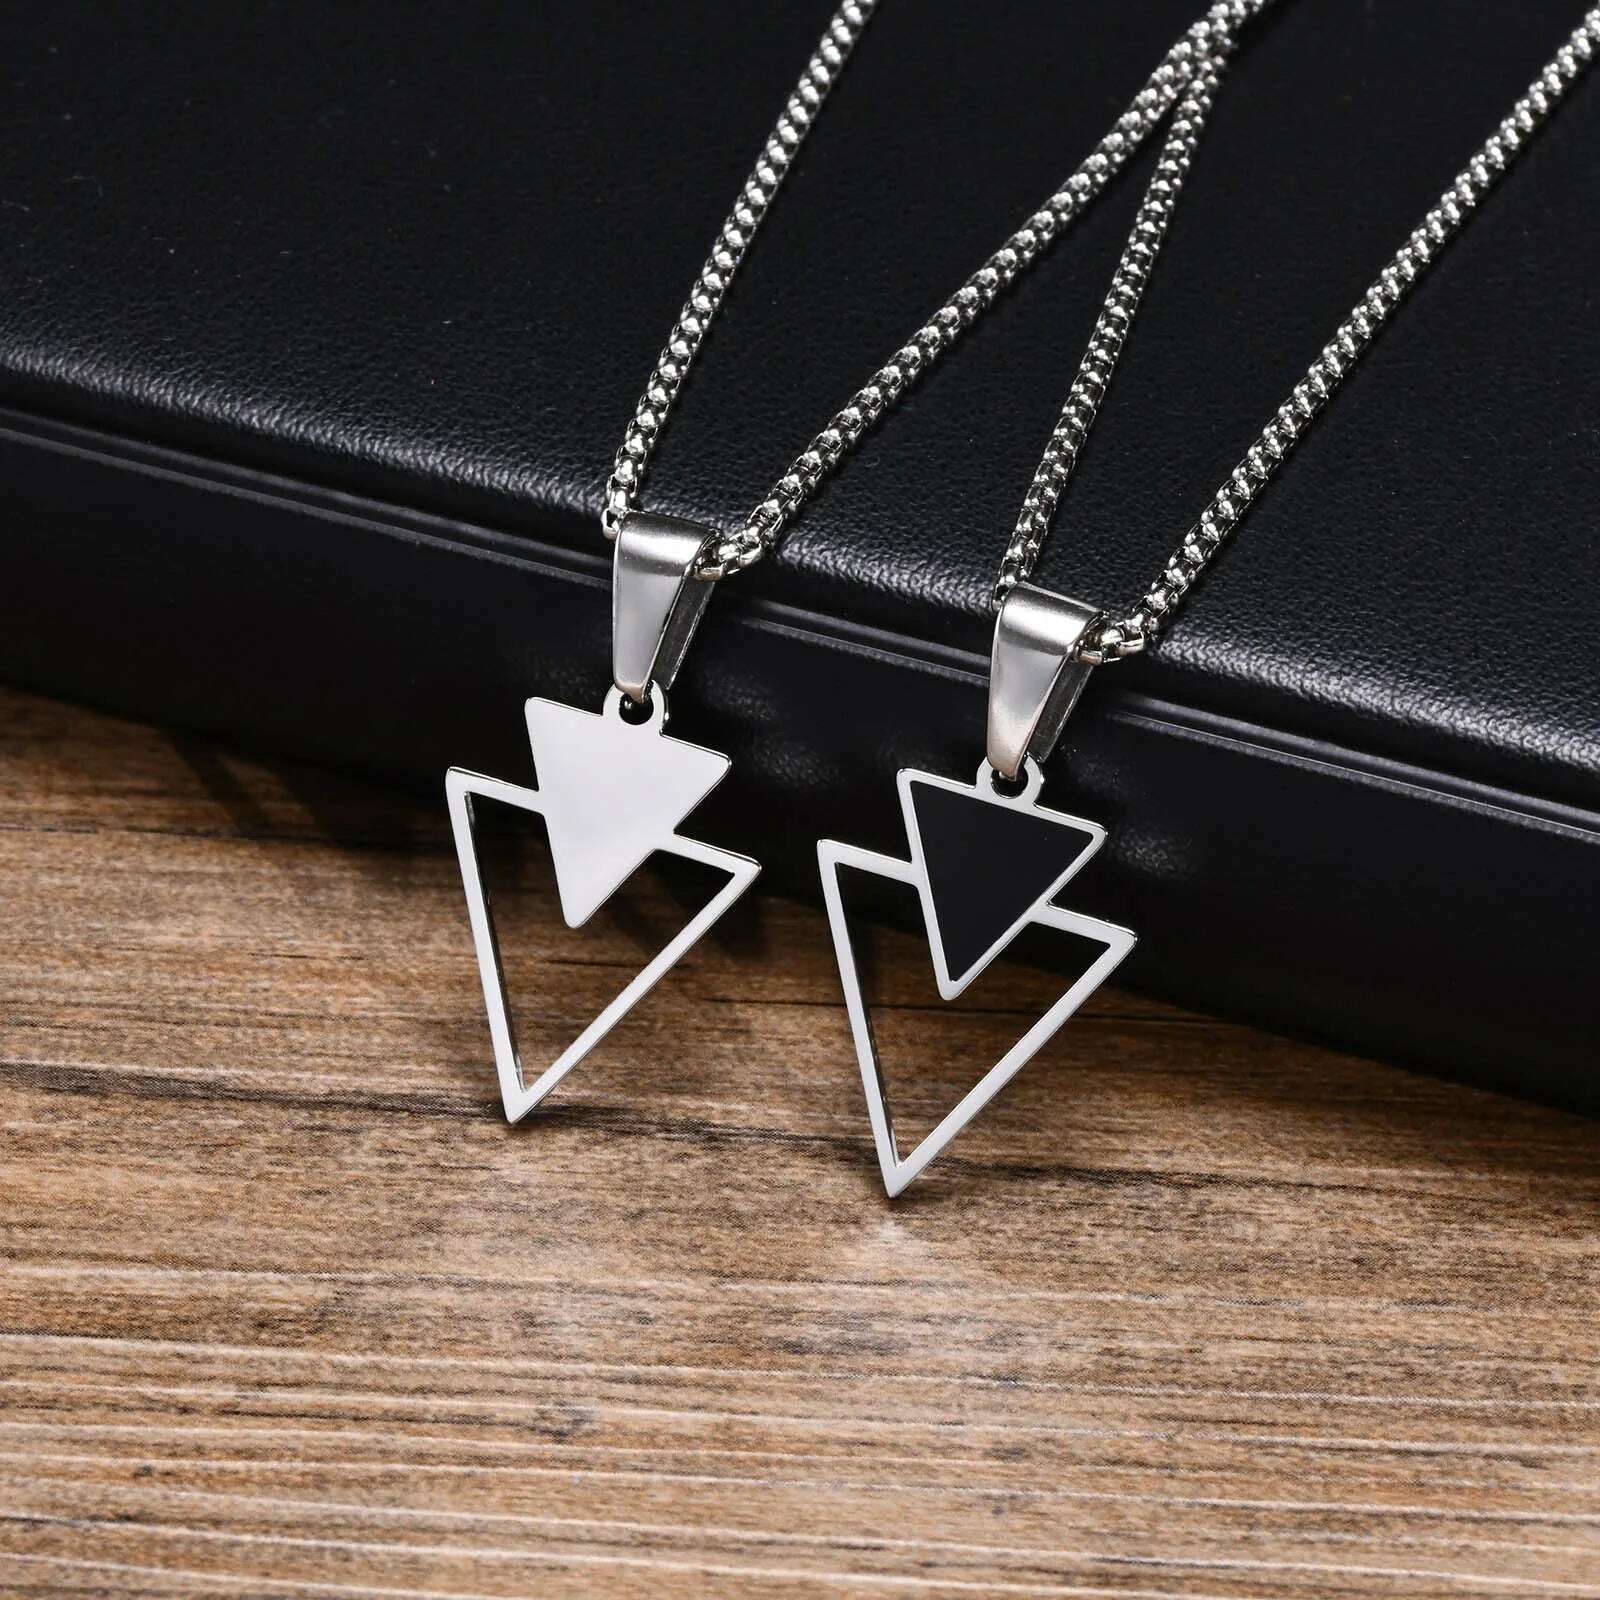 KIMLUD, Vnox New Fashion Triangle Pendant Necklace for Men Boys, Minimalist Stainless Steel Hollow Geometric Collar Male Jewelry Gift, PN-1834S / 45cm, KIMLUD Women's Clothes